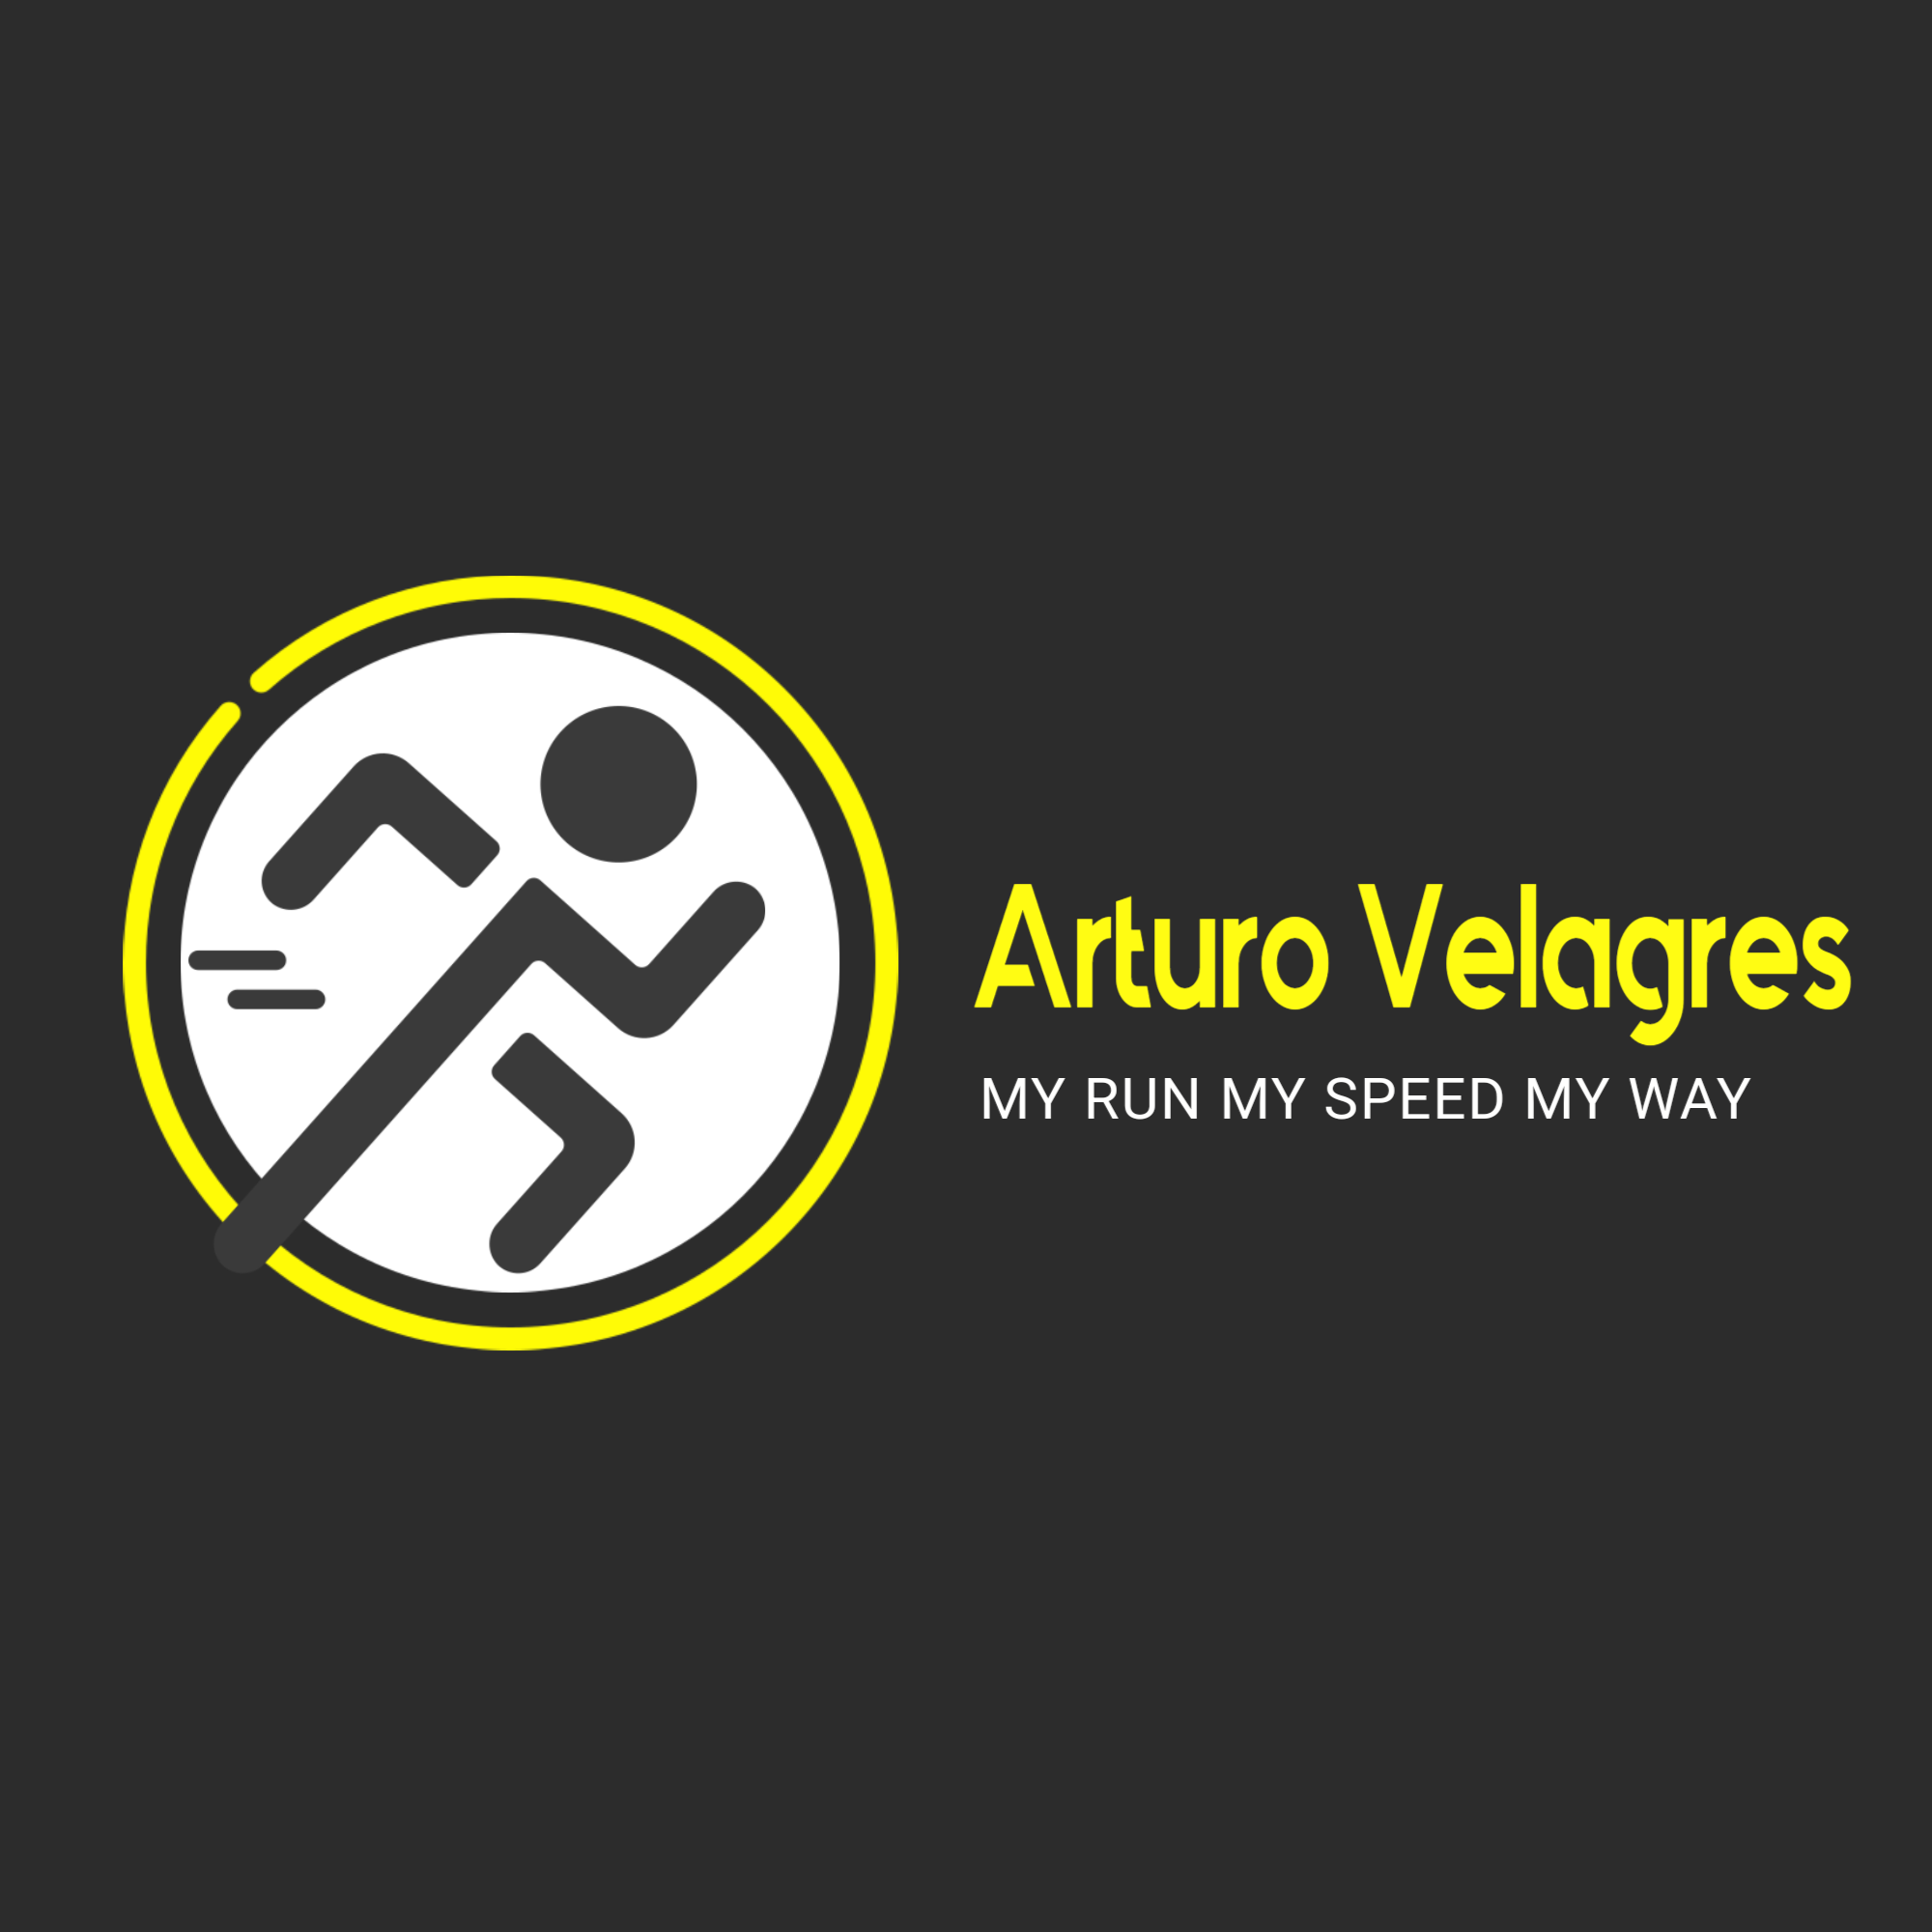 Arturo Velagres